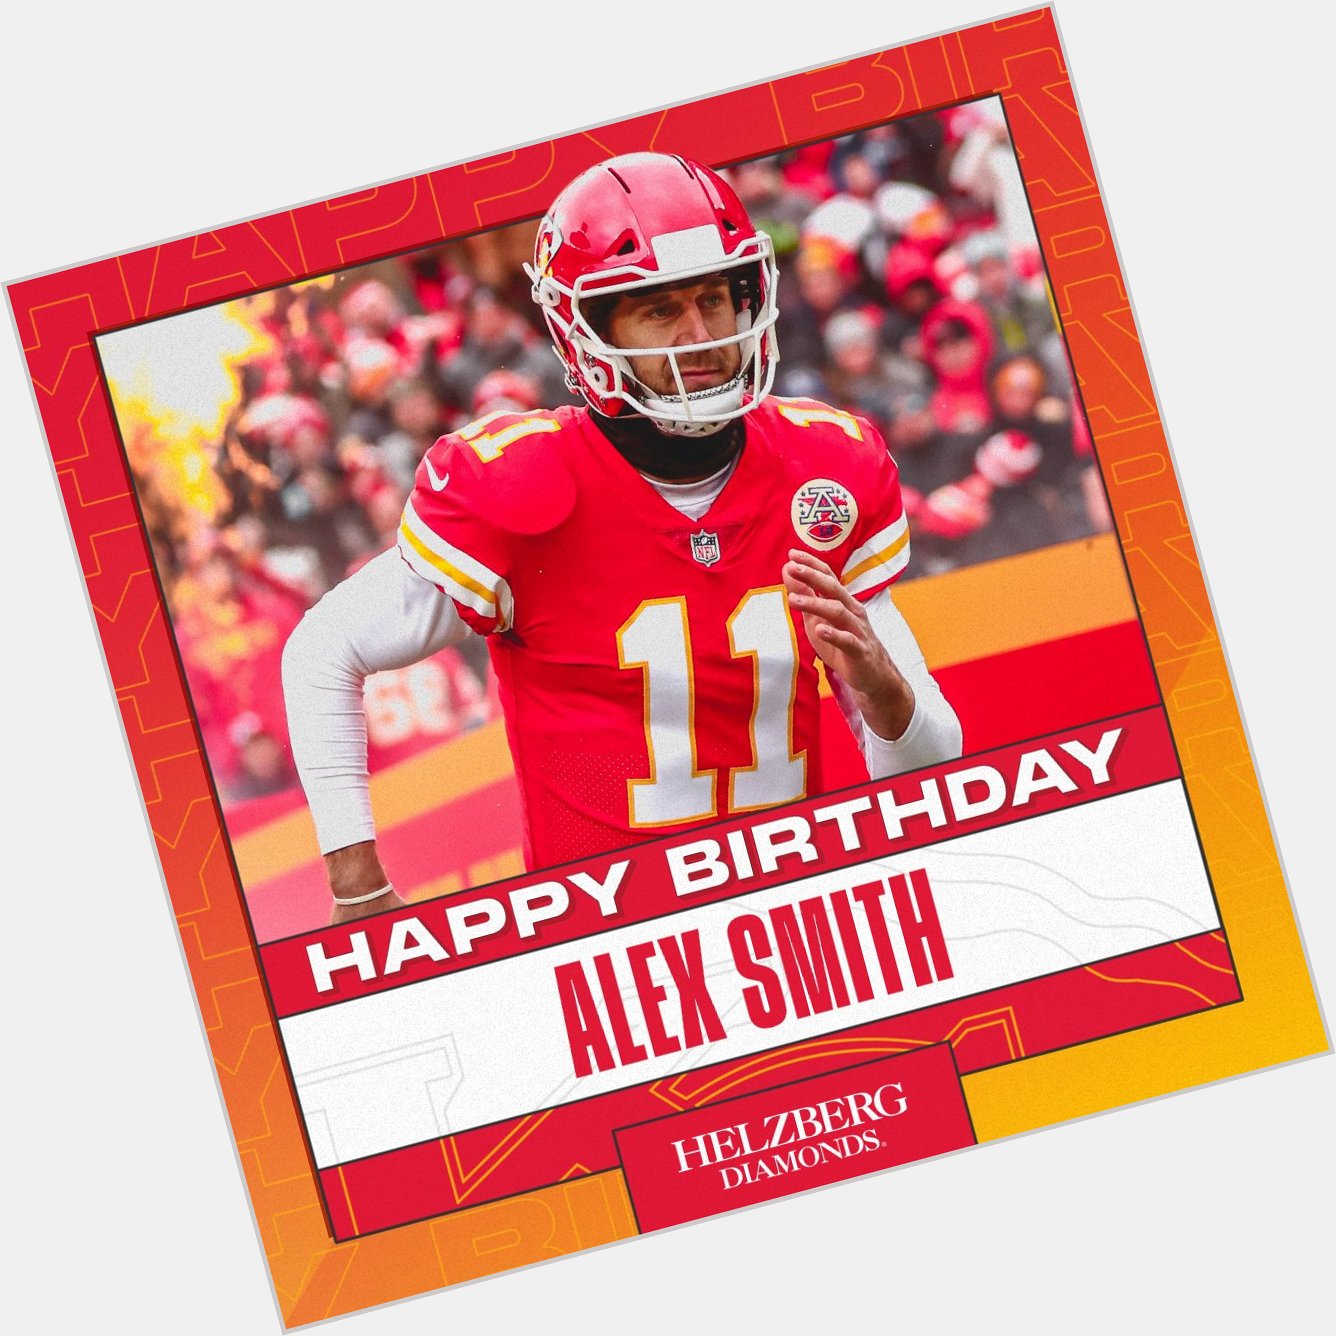 Chiefs: Wishing our guy Alex Smith a very Happy Birthday today!  